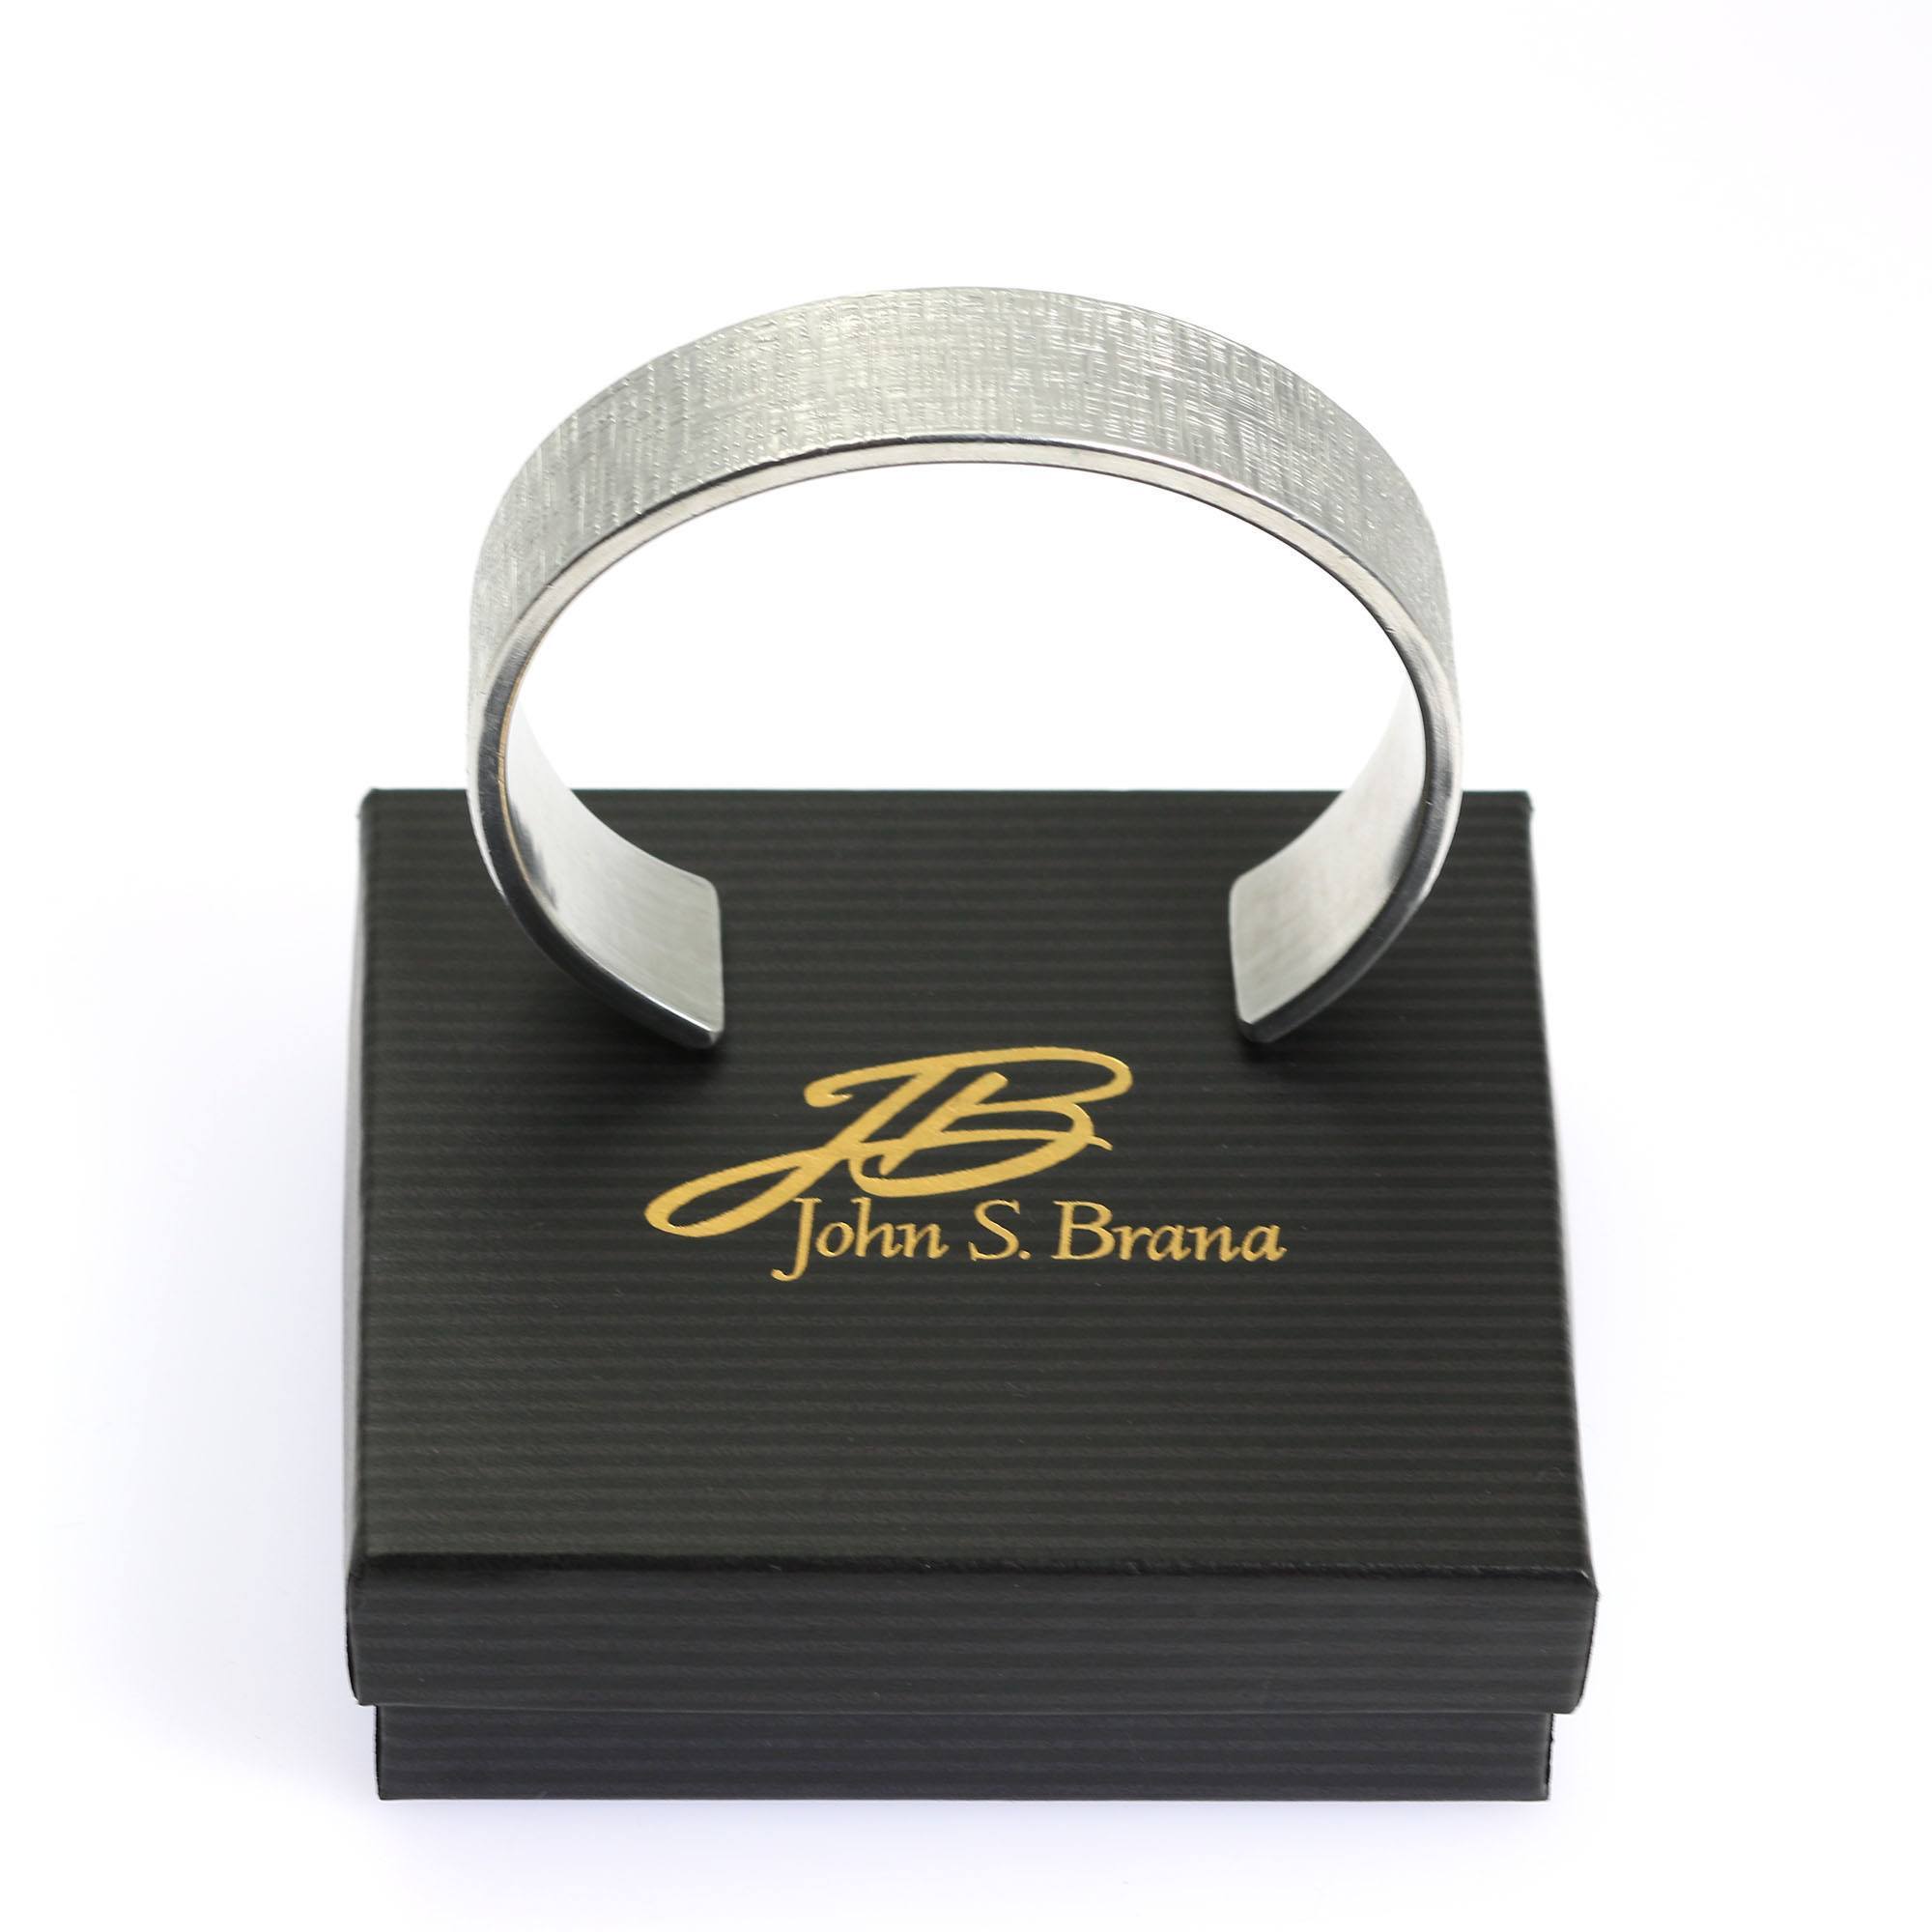 Linen Aluminum Cuff Bracelet in Gift Box